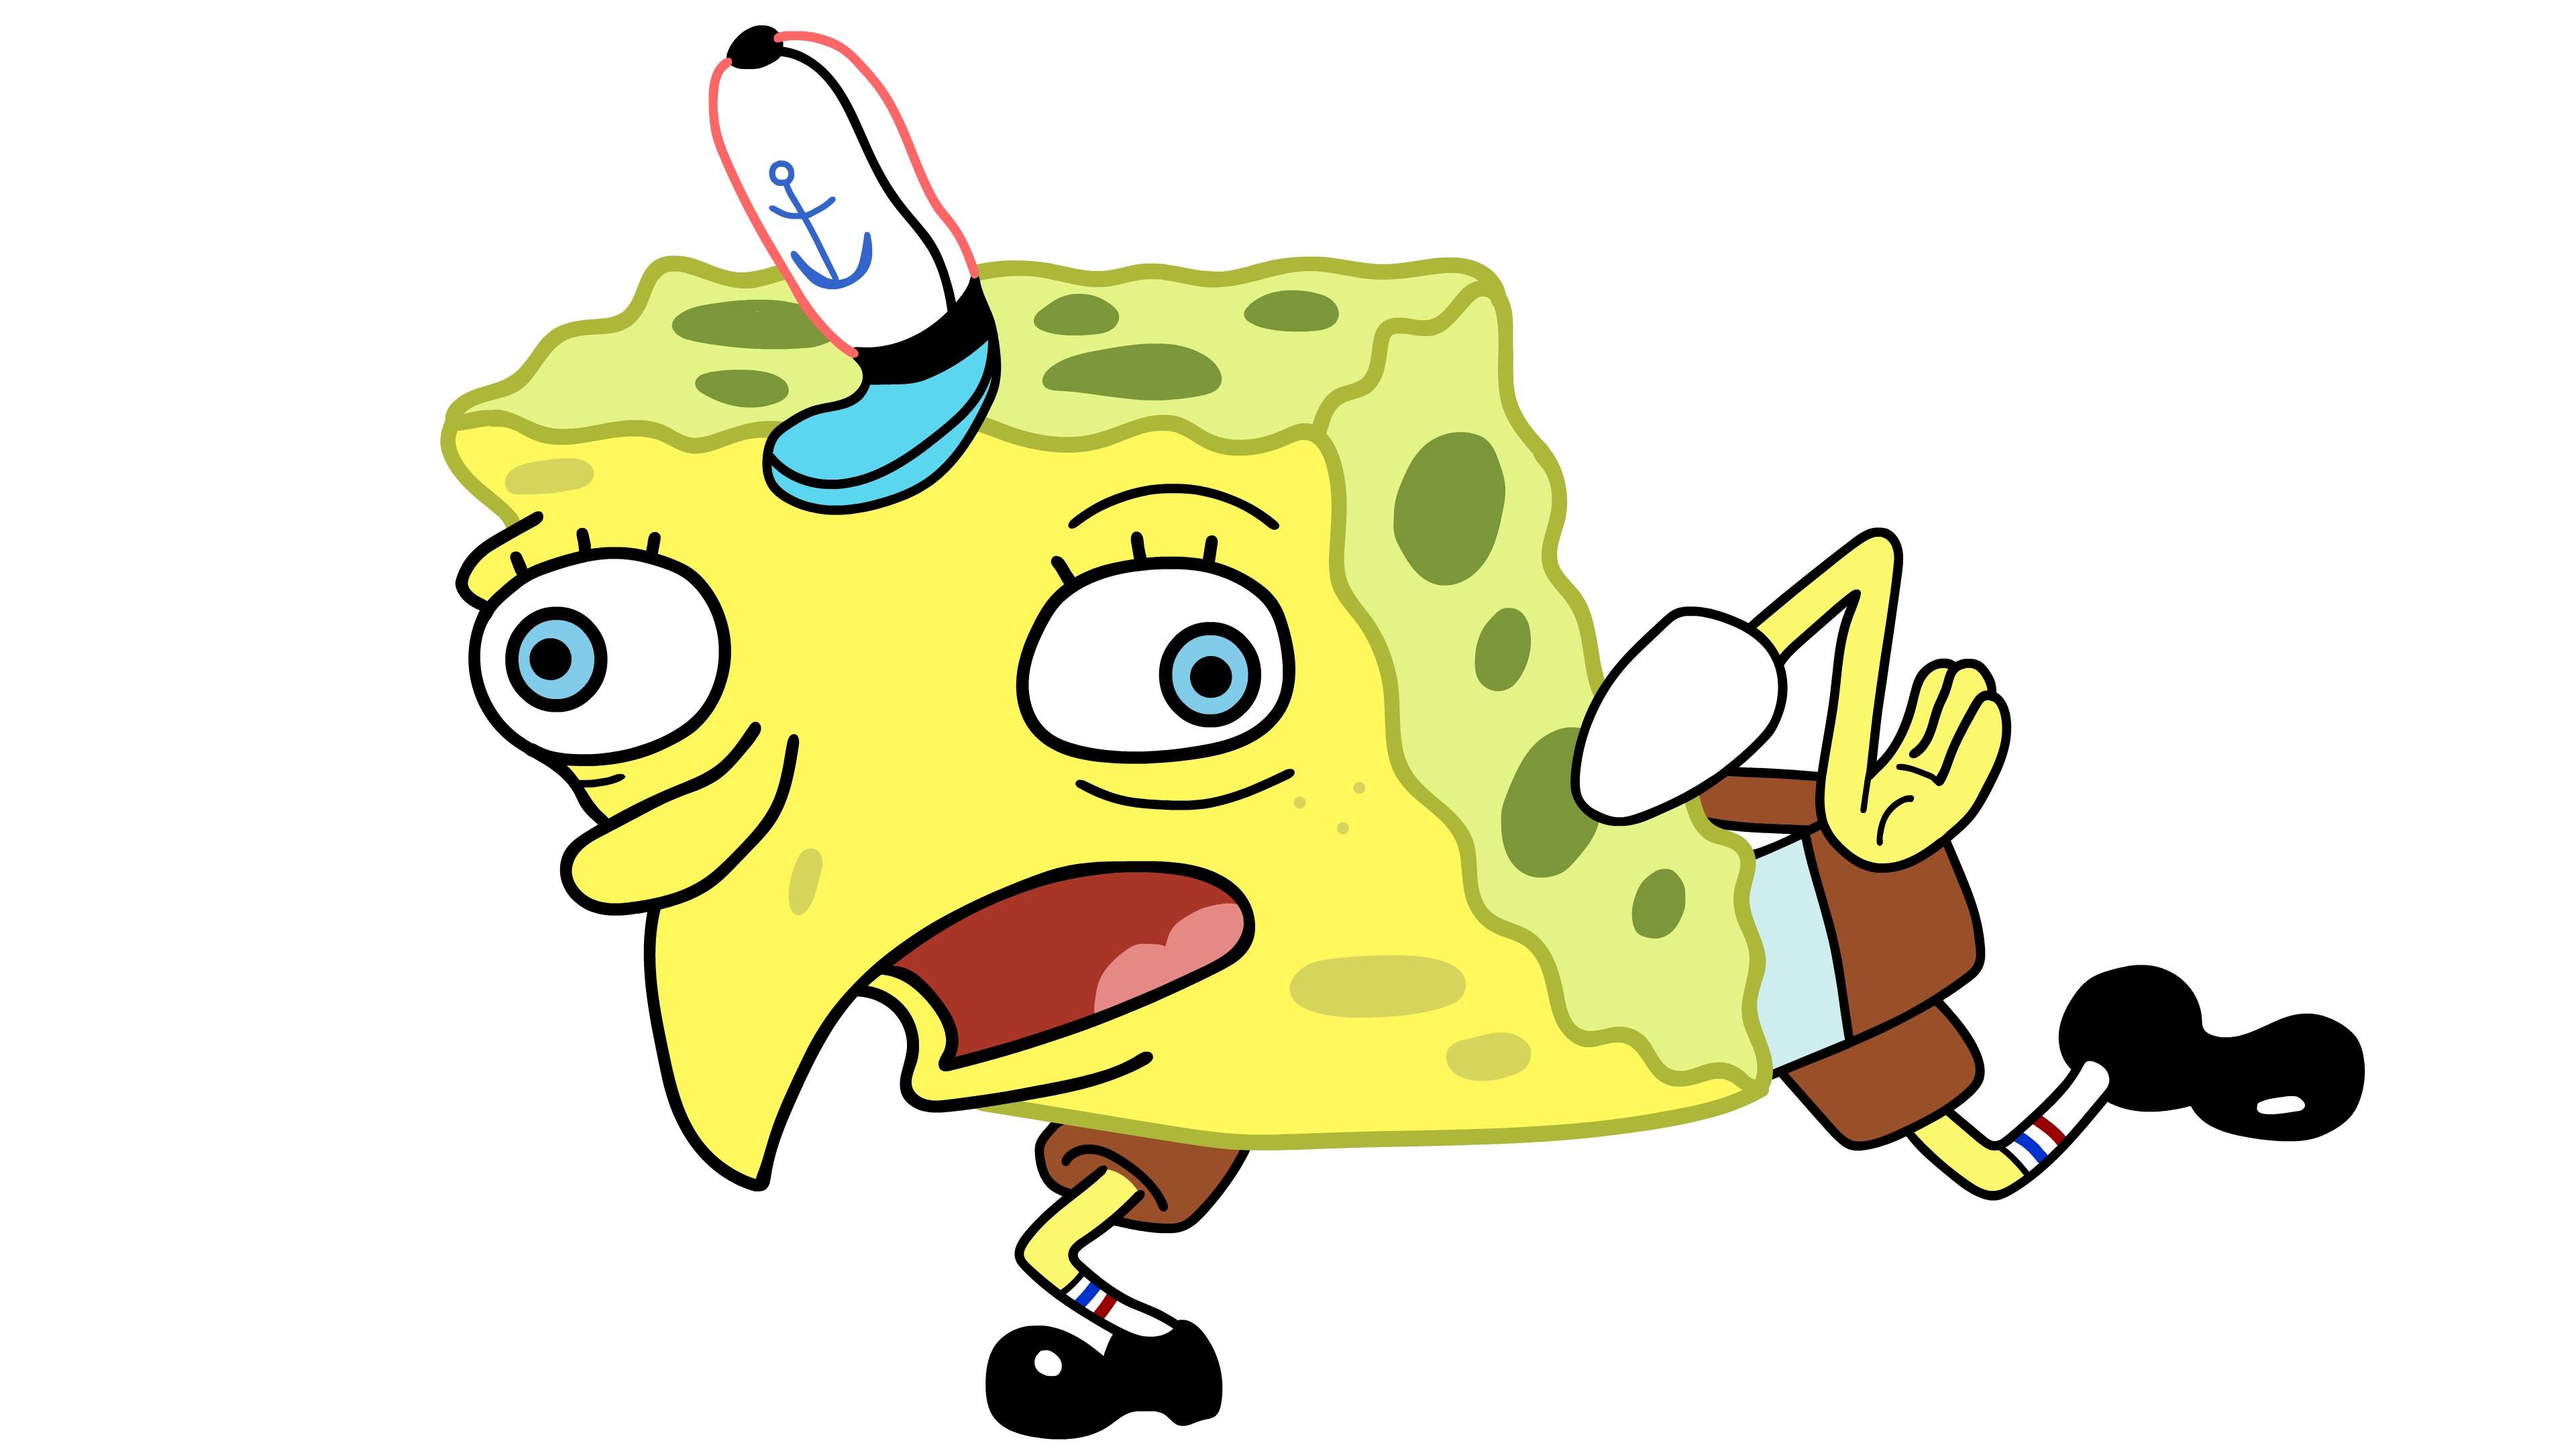 Spongebob meme PNG 4k - The source of your creativity